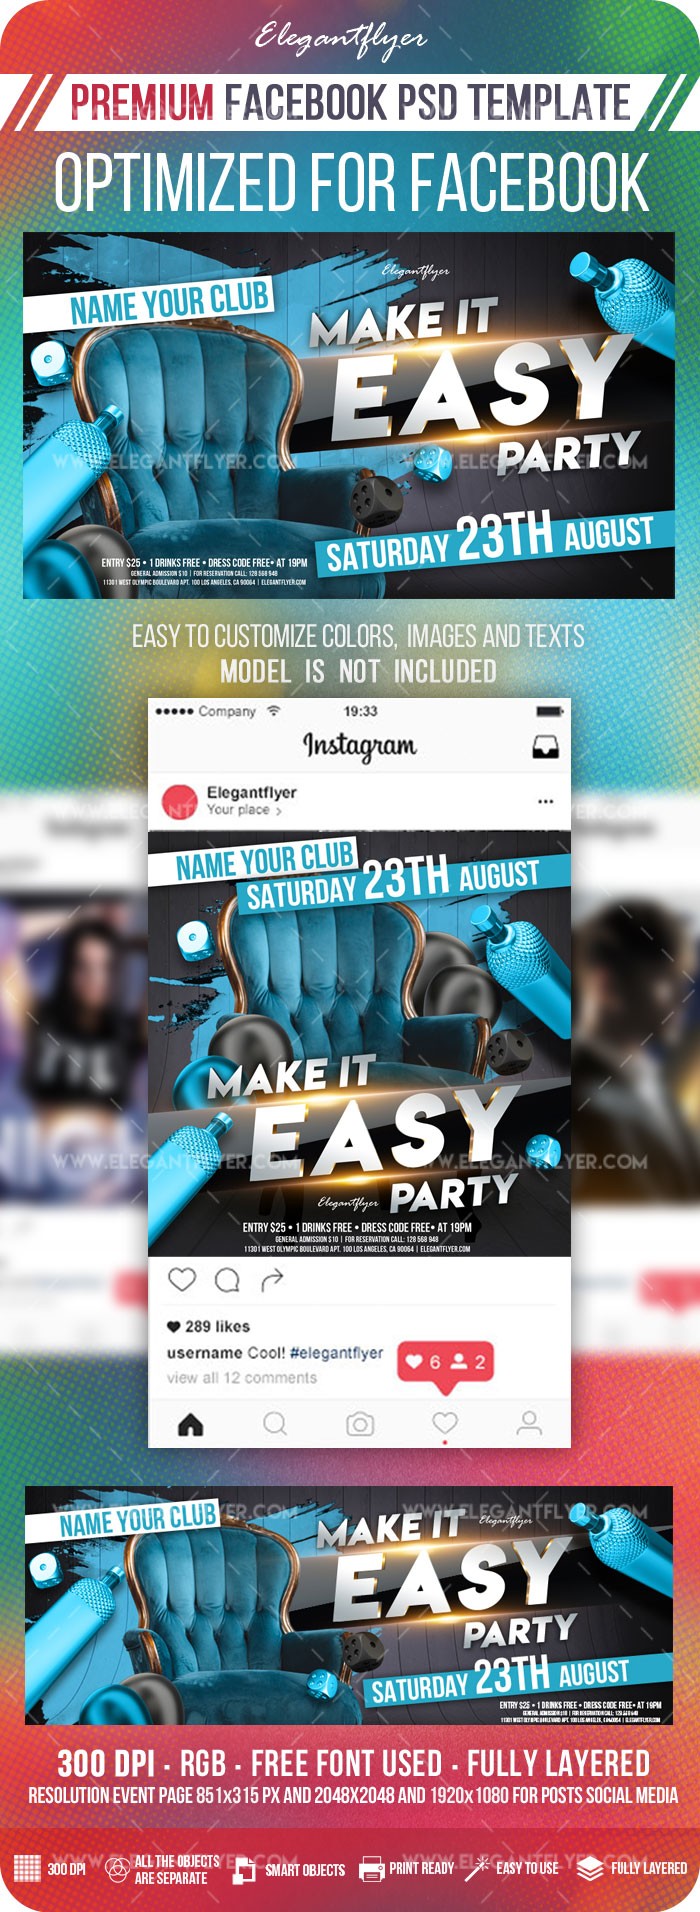 Make it Easy Party Facebook by ElegantFlyer